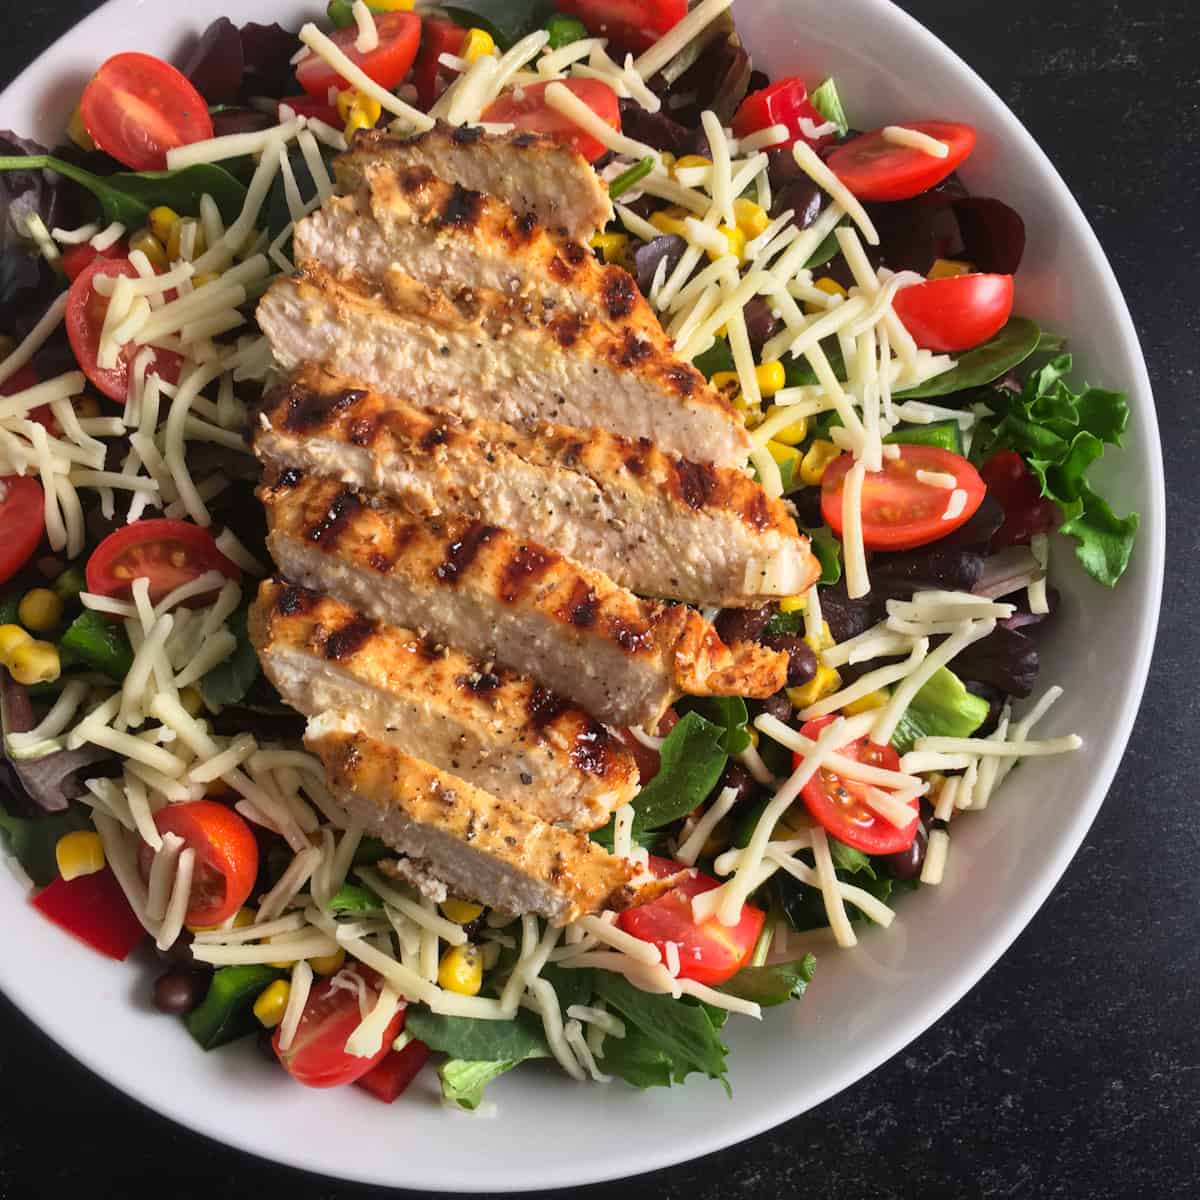 https://summeryule.com/wp-content/uploads/2022/04/chick-fil-a-salad-grilled-chicken.jpeg